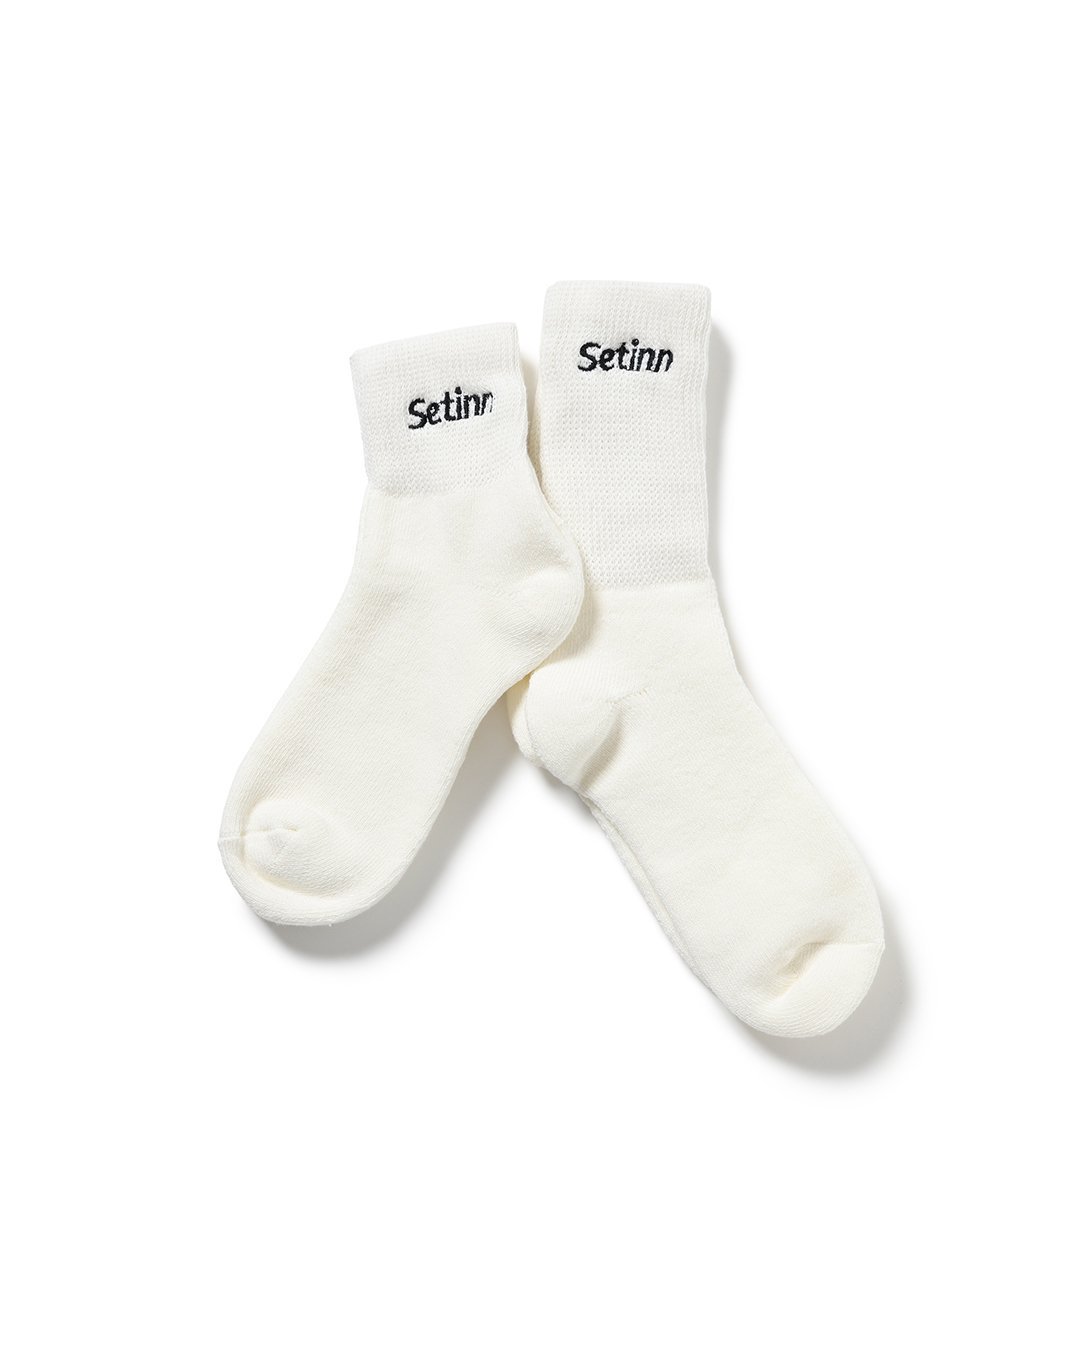 Setinn<br>Club Socks 2P
<br>
